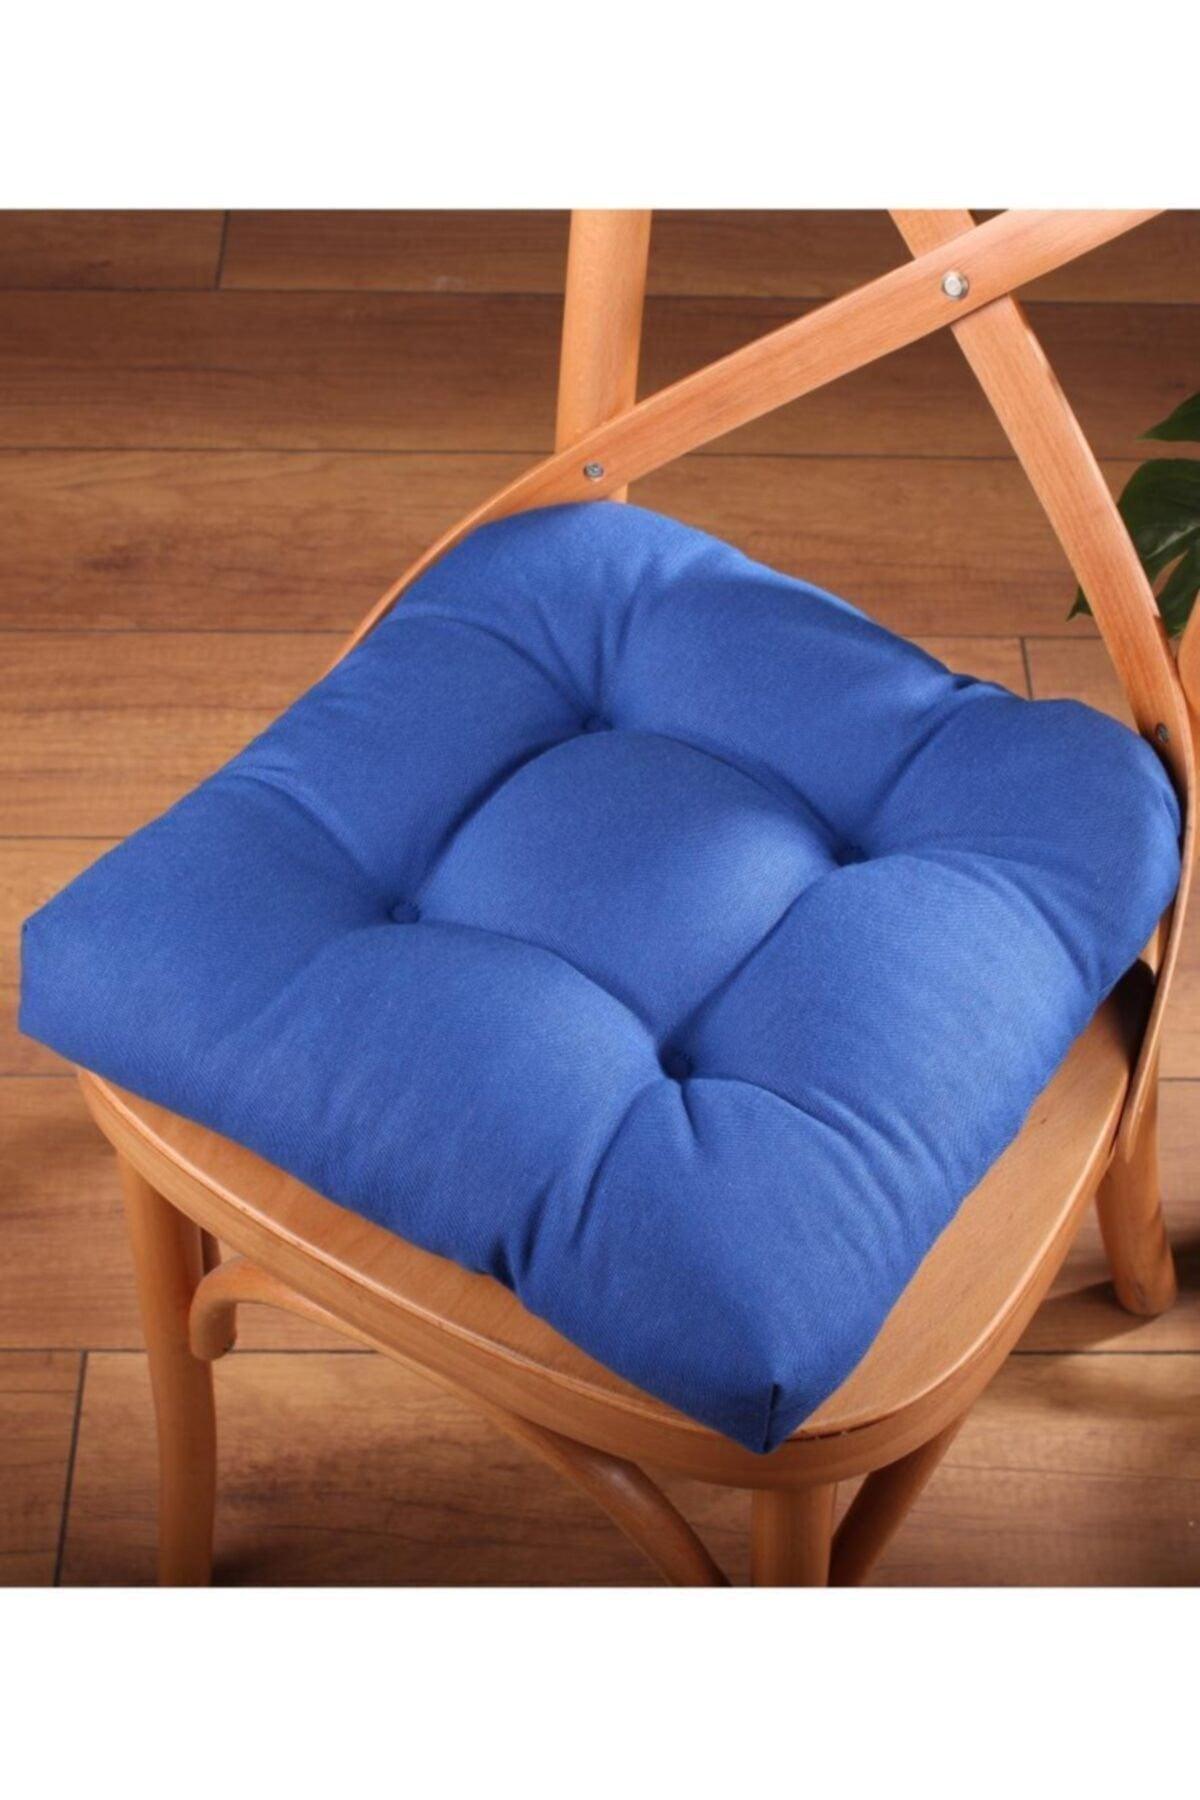 Luxury Pofidik Navy Blue Chair Cushion Special